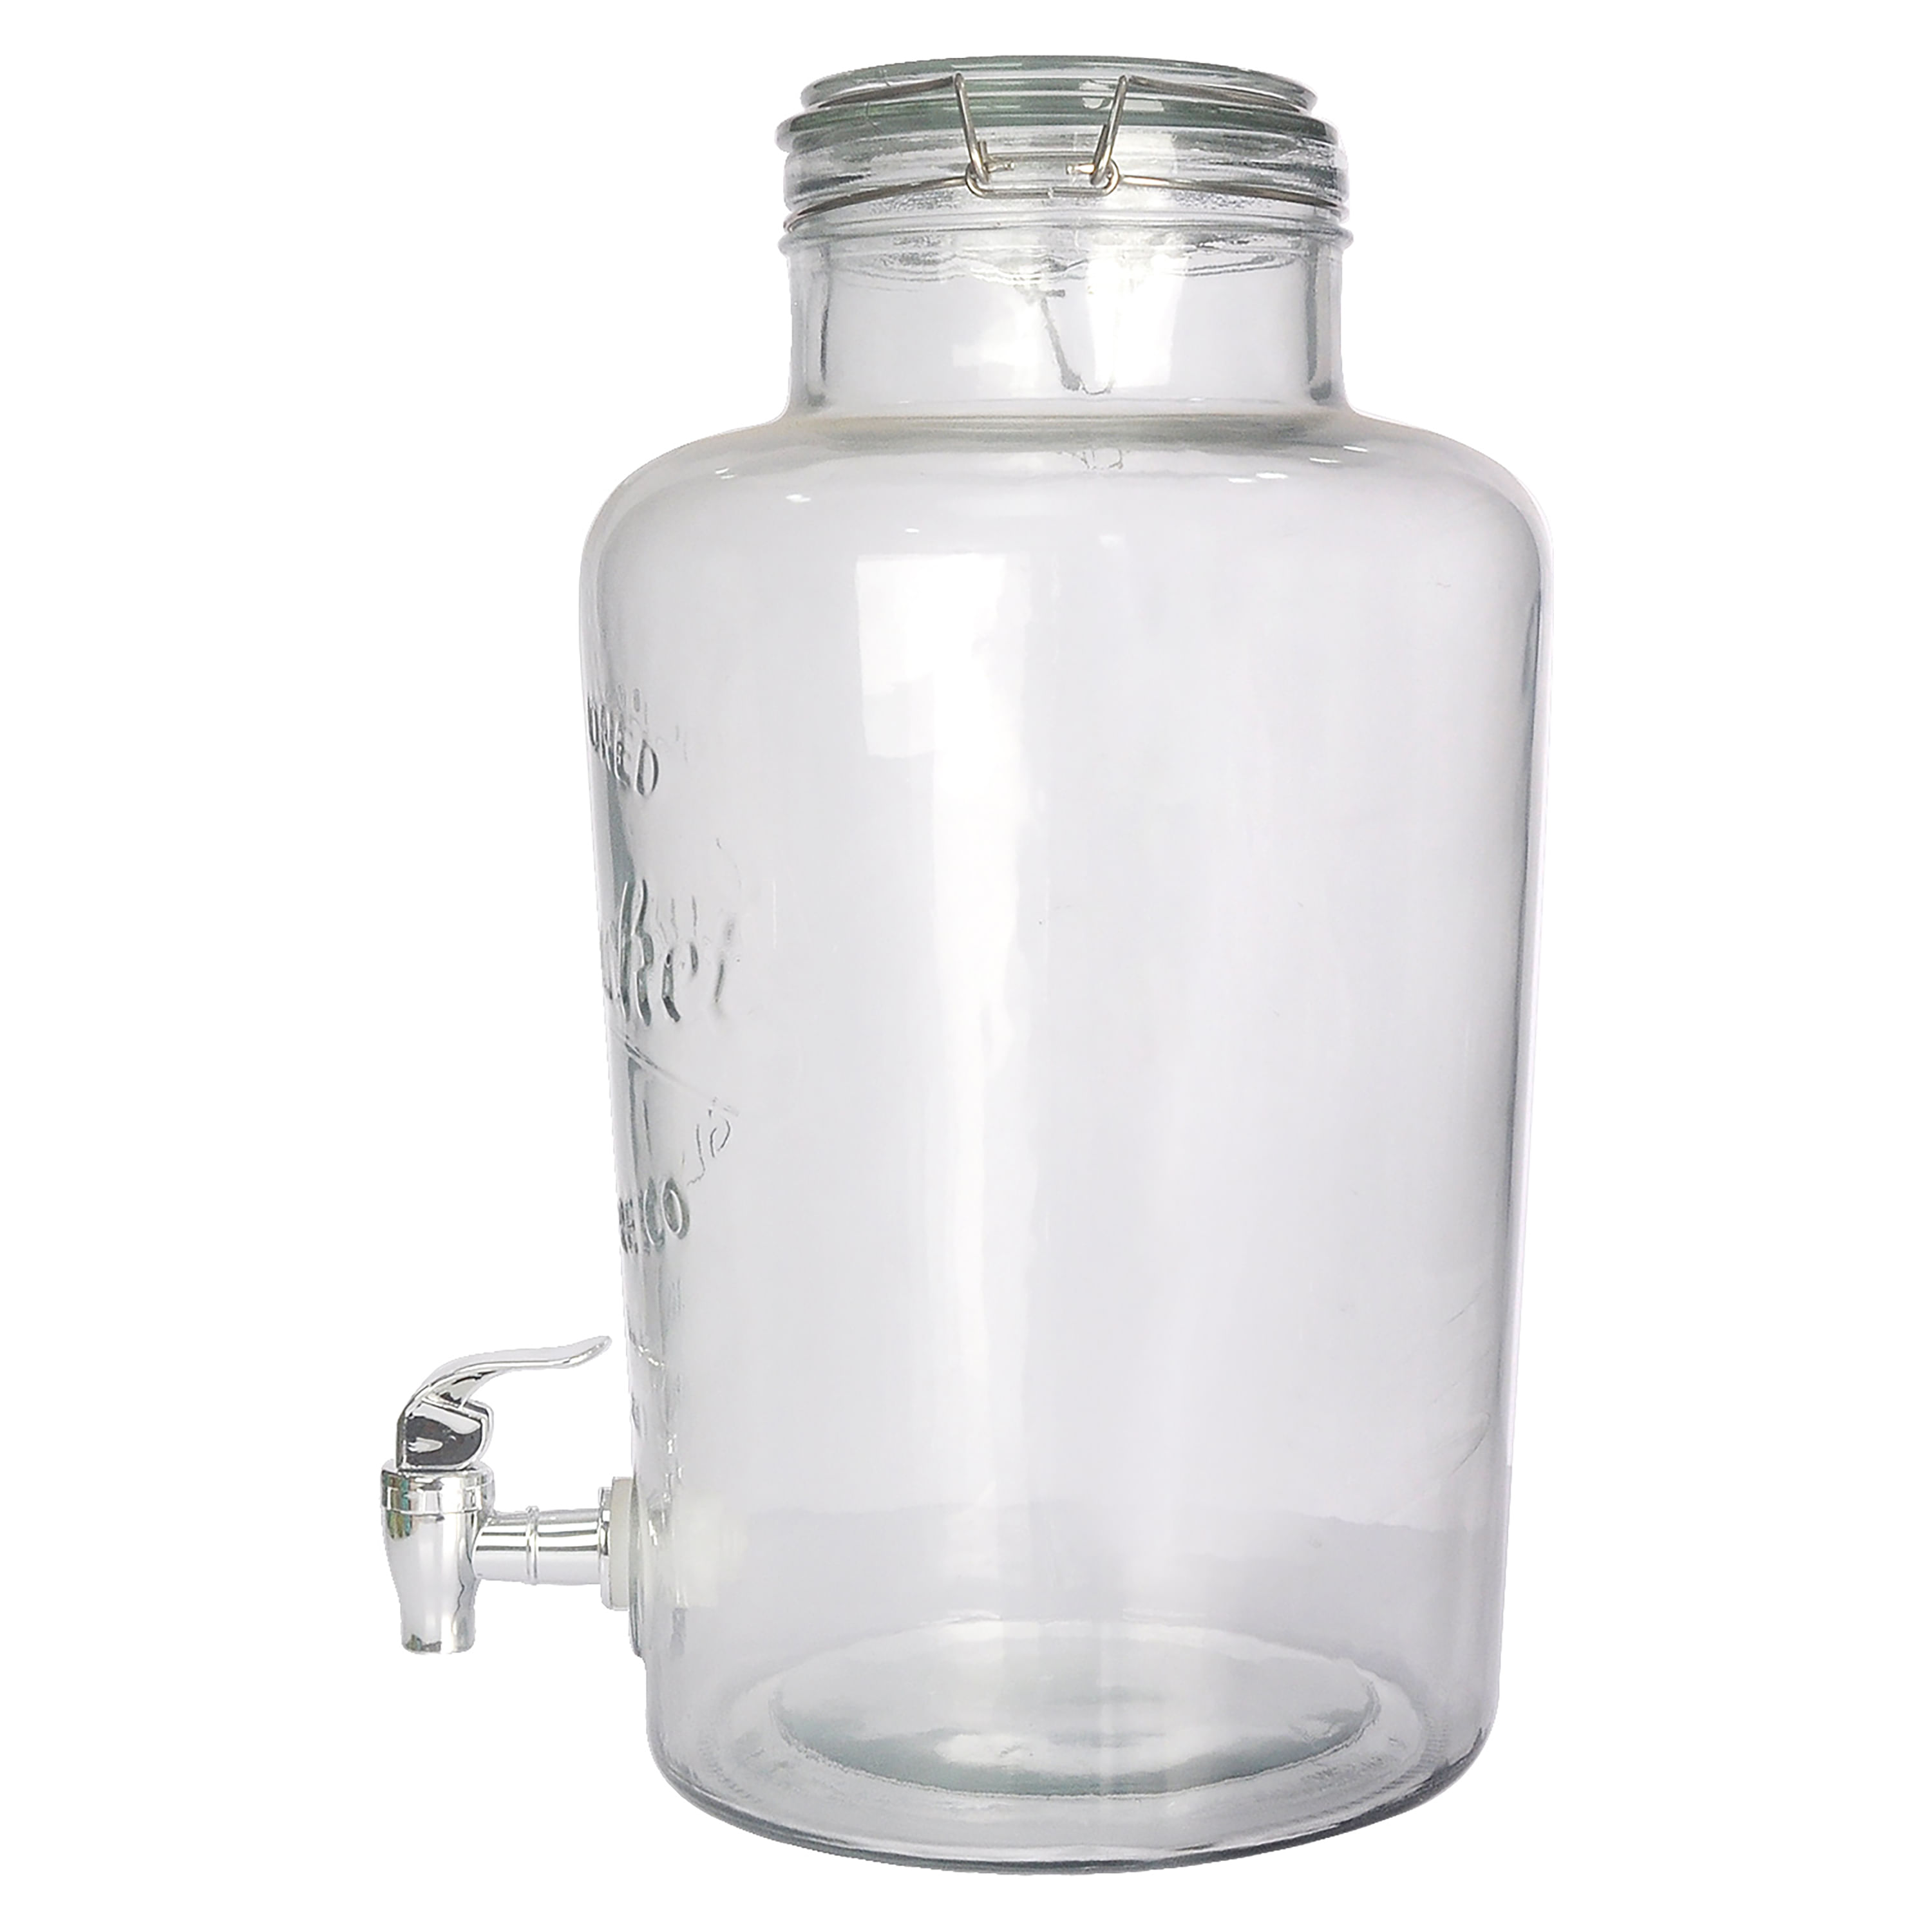 Comprar Dispensador de agua Oster de mesa, 2 temperaturas de agua fria y  caliente, color blanco, diseño compacto, Walmart Guatemala - Maxi Despensa